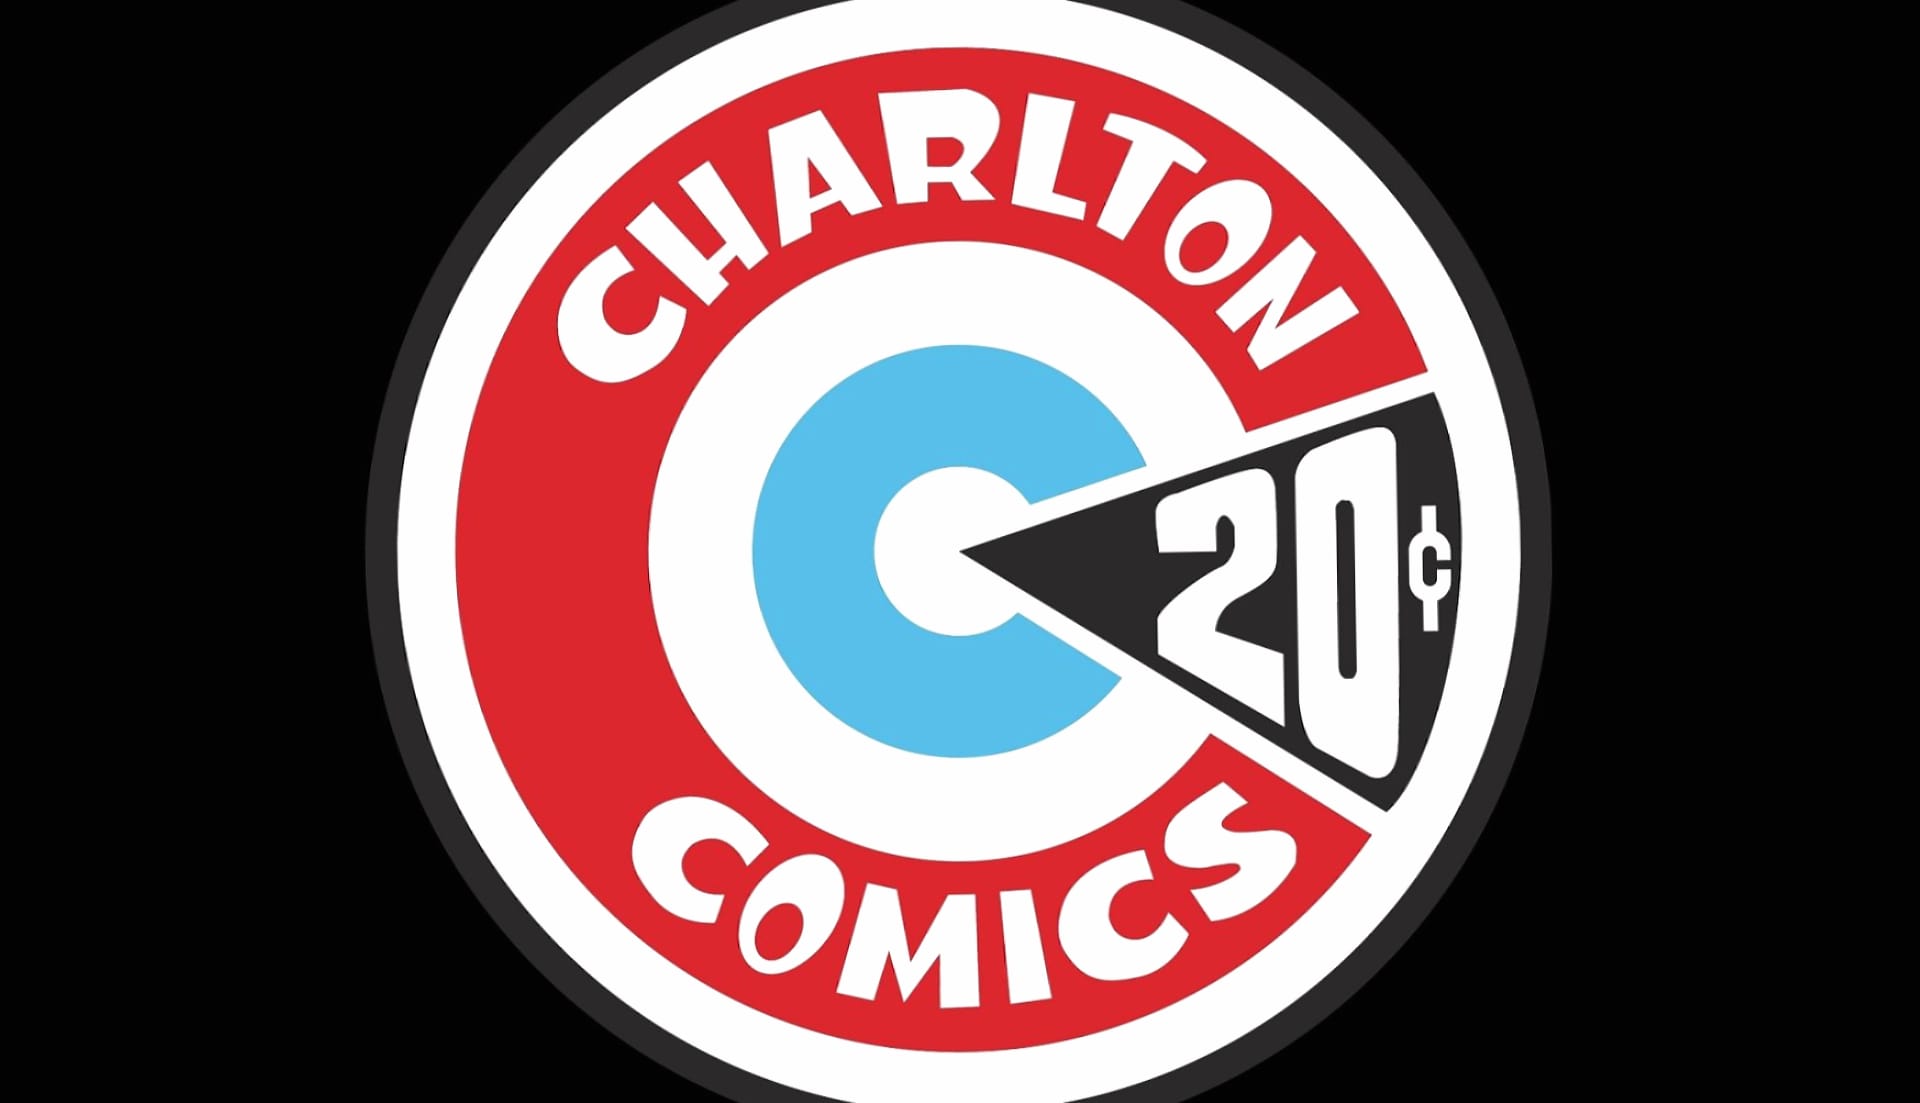 charlton Comics wallpapers HD quality